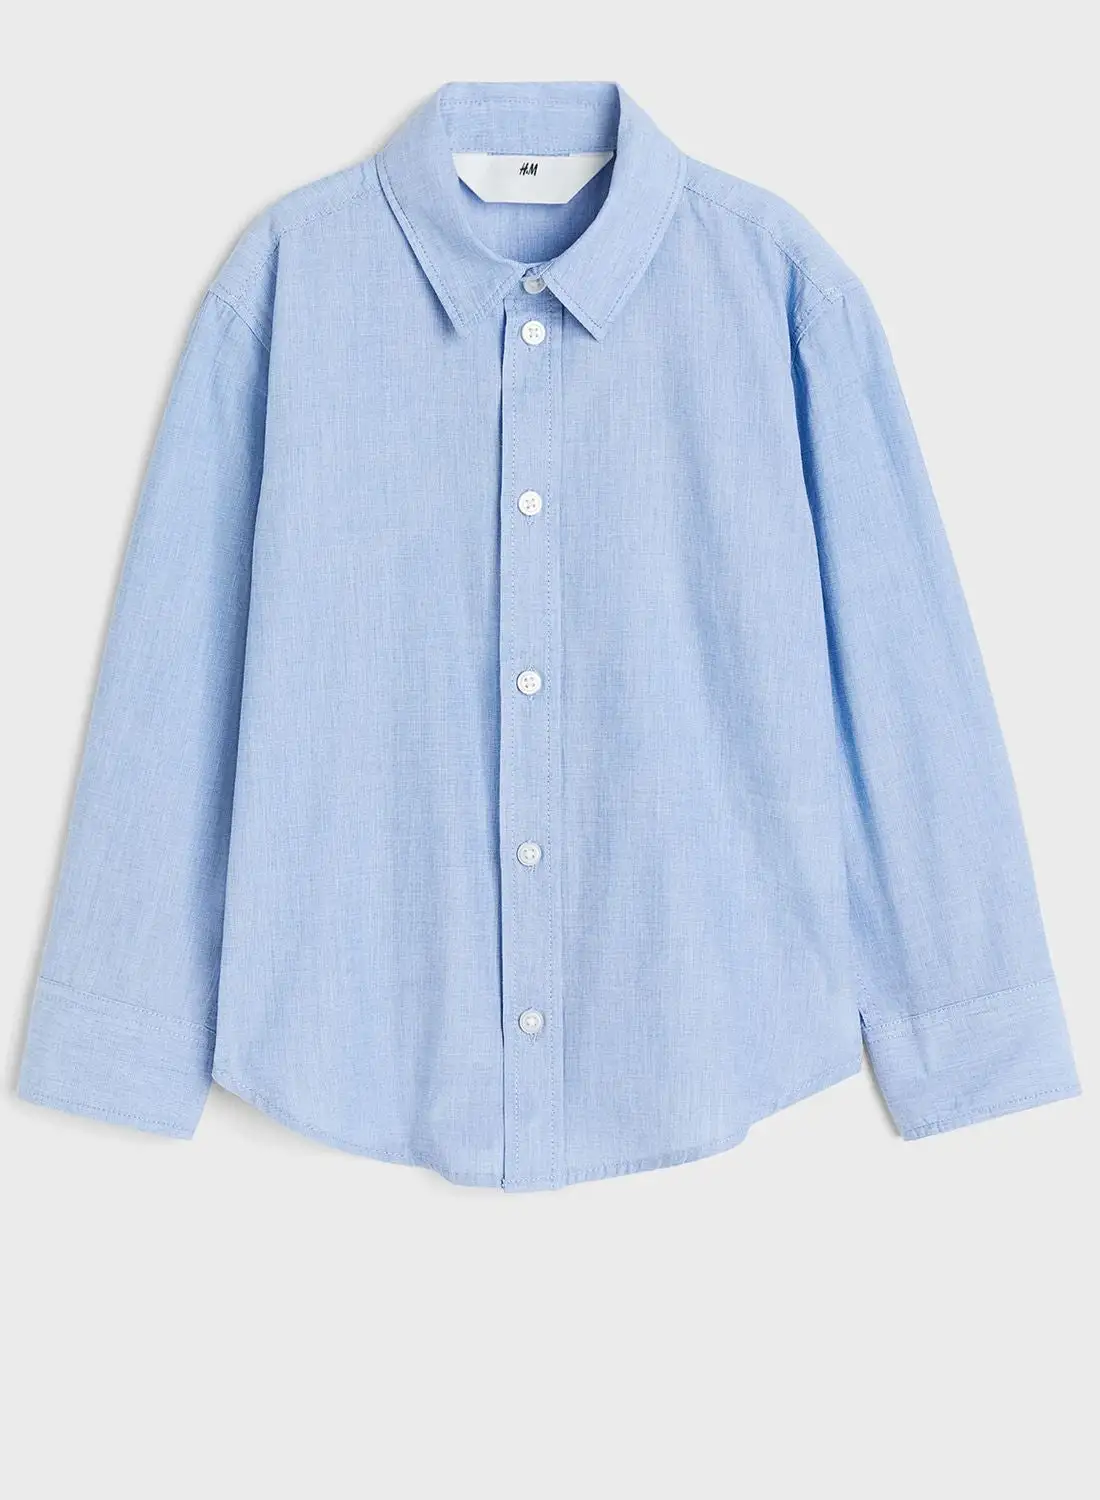 H&M Kids Long-Sleeved Cotton Shirt